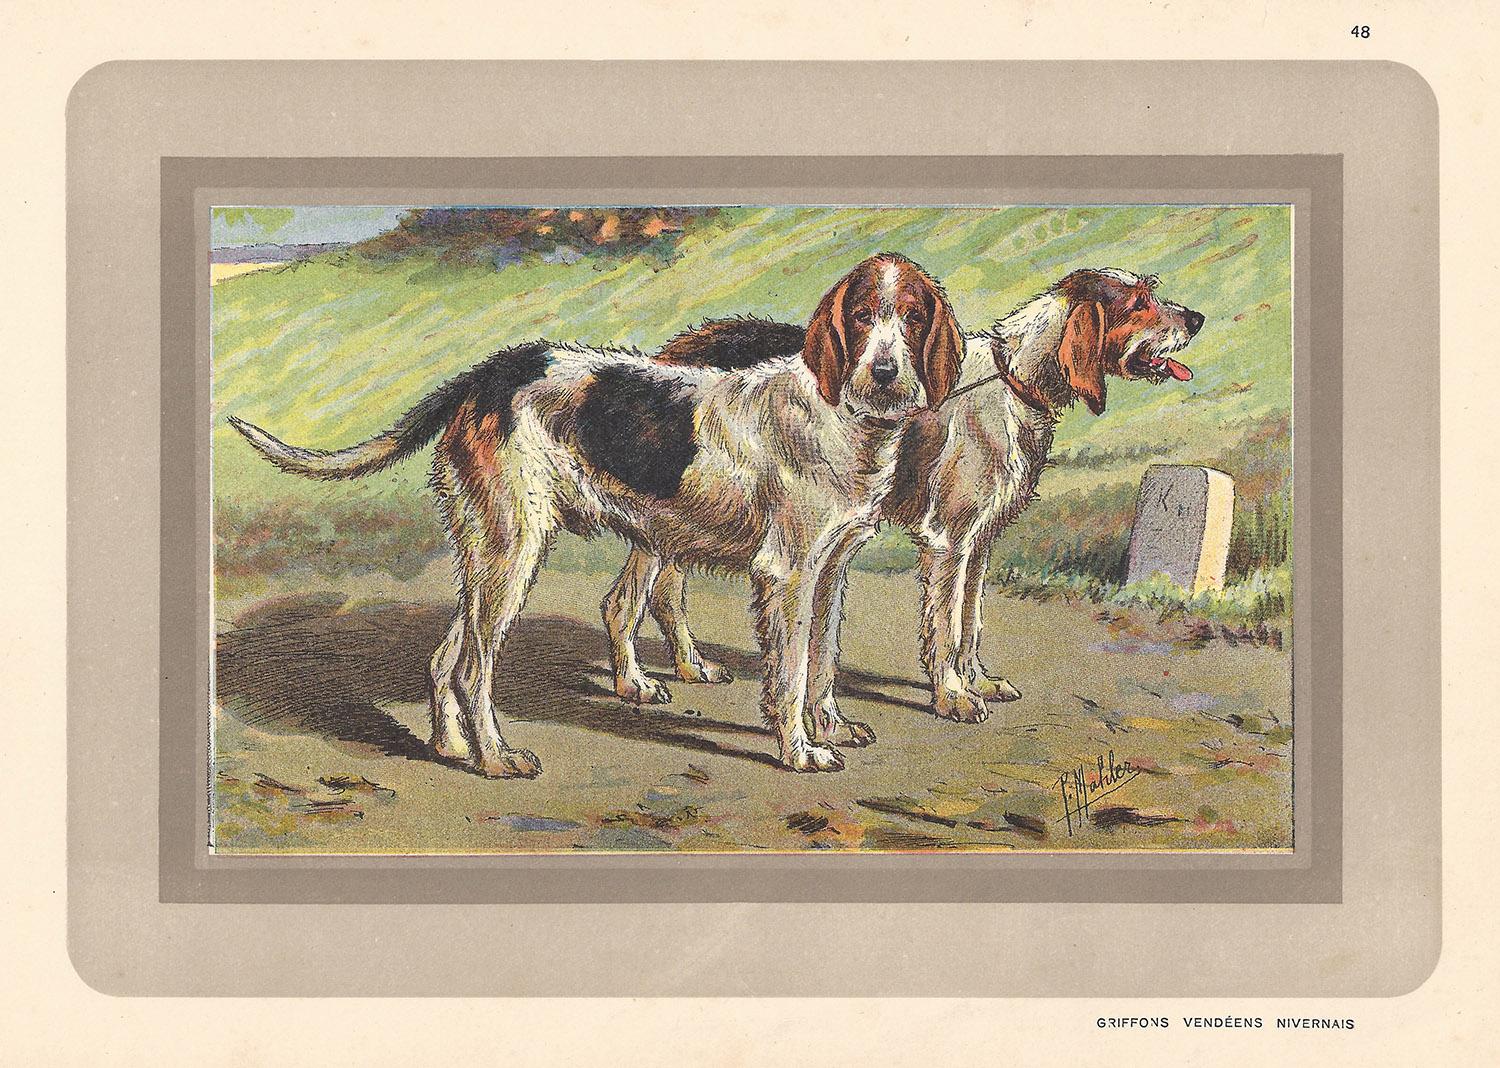 P. Mahler Animal Print - Griffon Vendeens Nivernais, French hound, dog chromolithograph, 1930s